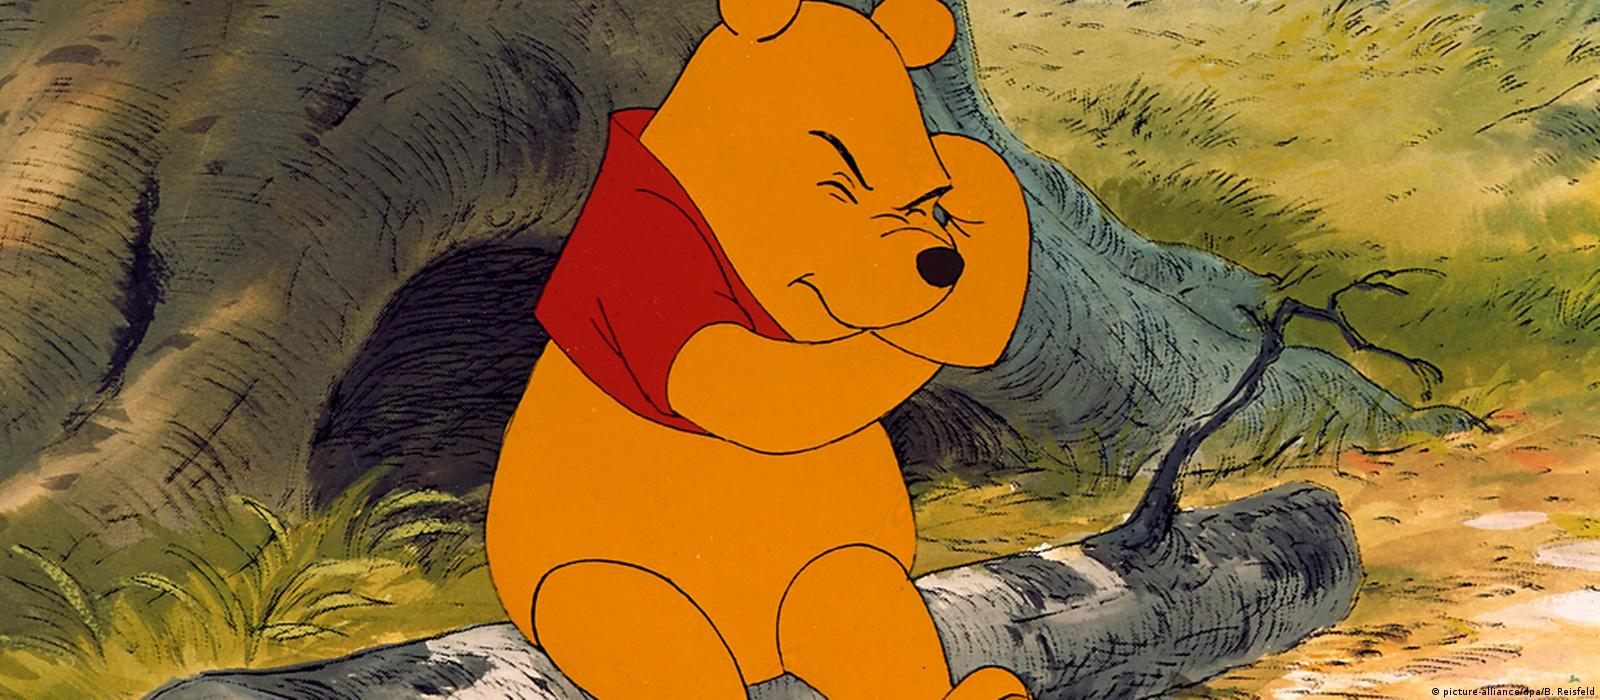 Everyone's favorite bear Winnie-the-Pooh turns 90 – DW – 10/14/2016